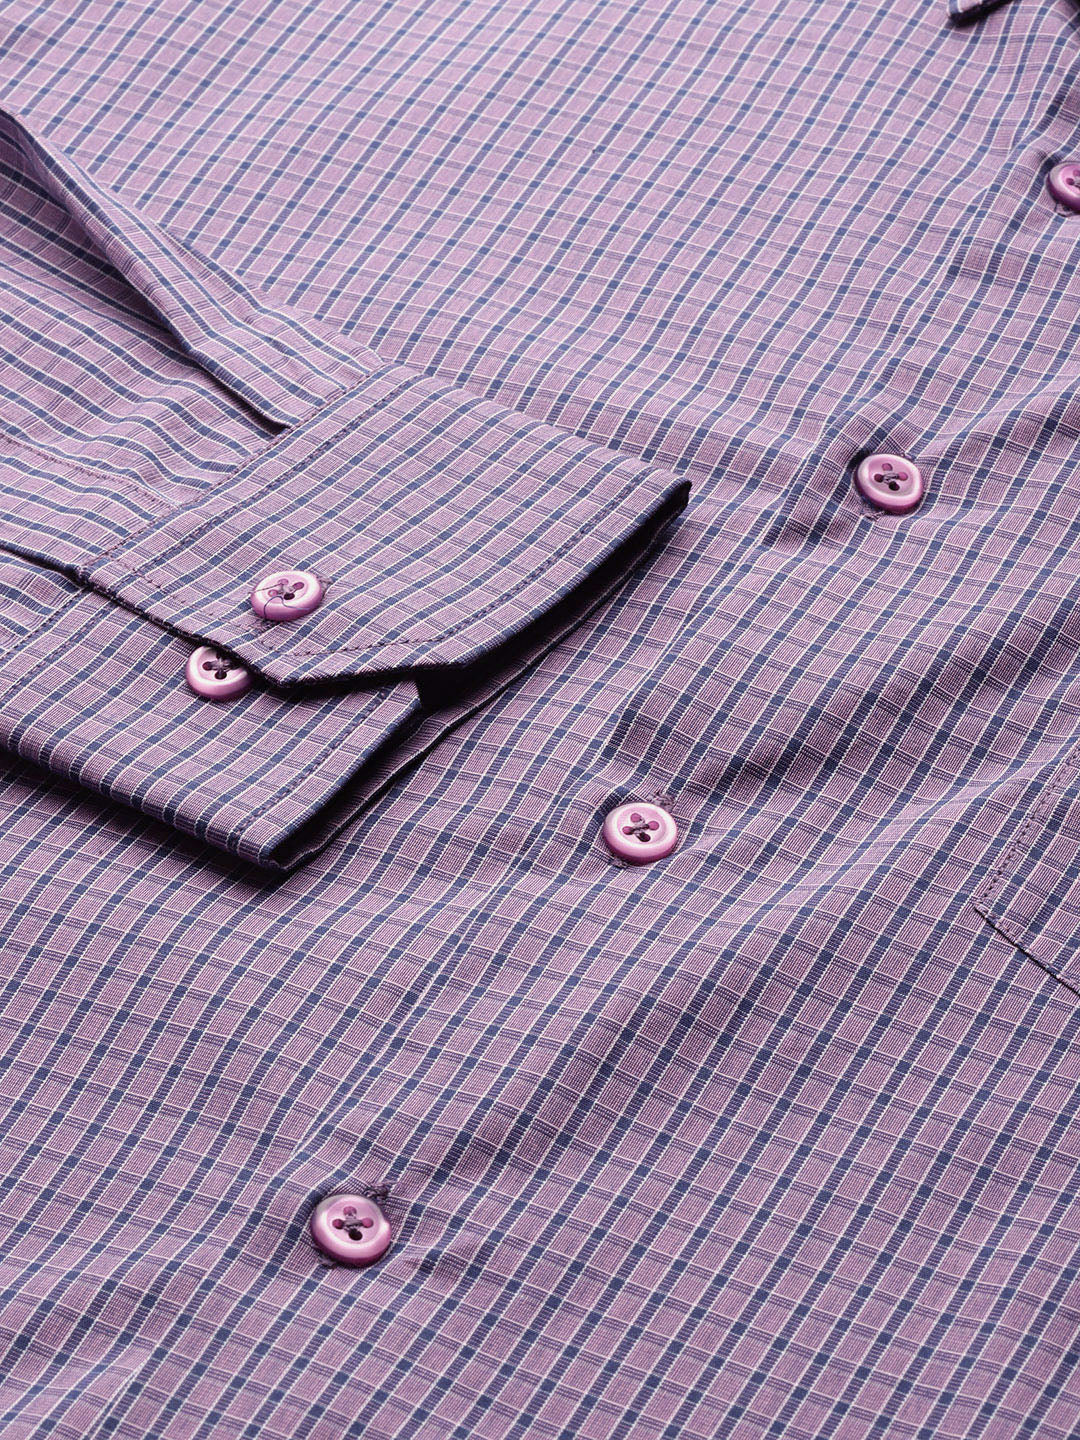 Men Purple Checks Pure Cotton Slim Fit Formal Shirt